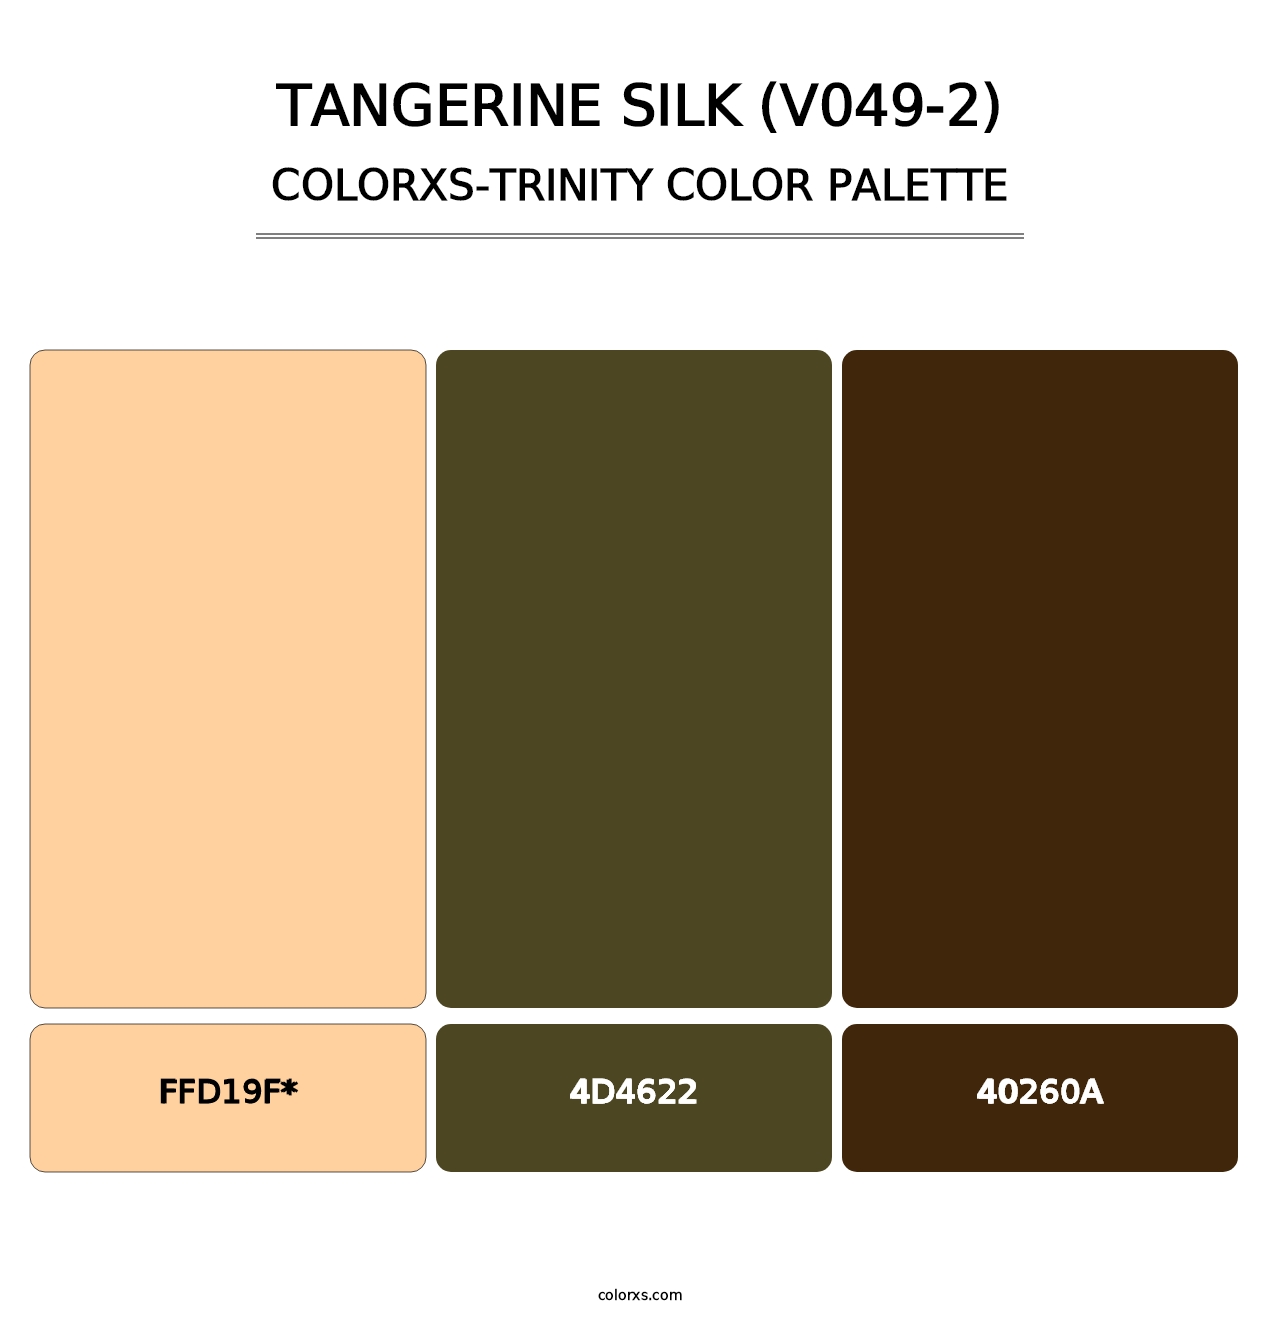 Tangerine Silk (V049-2) - Colorxs Trinity Palette